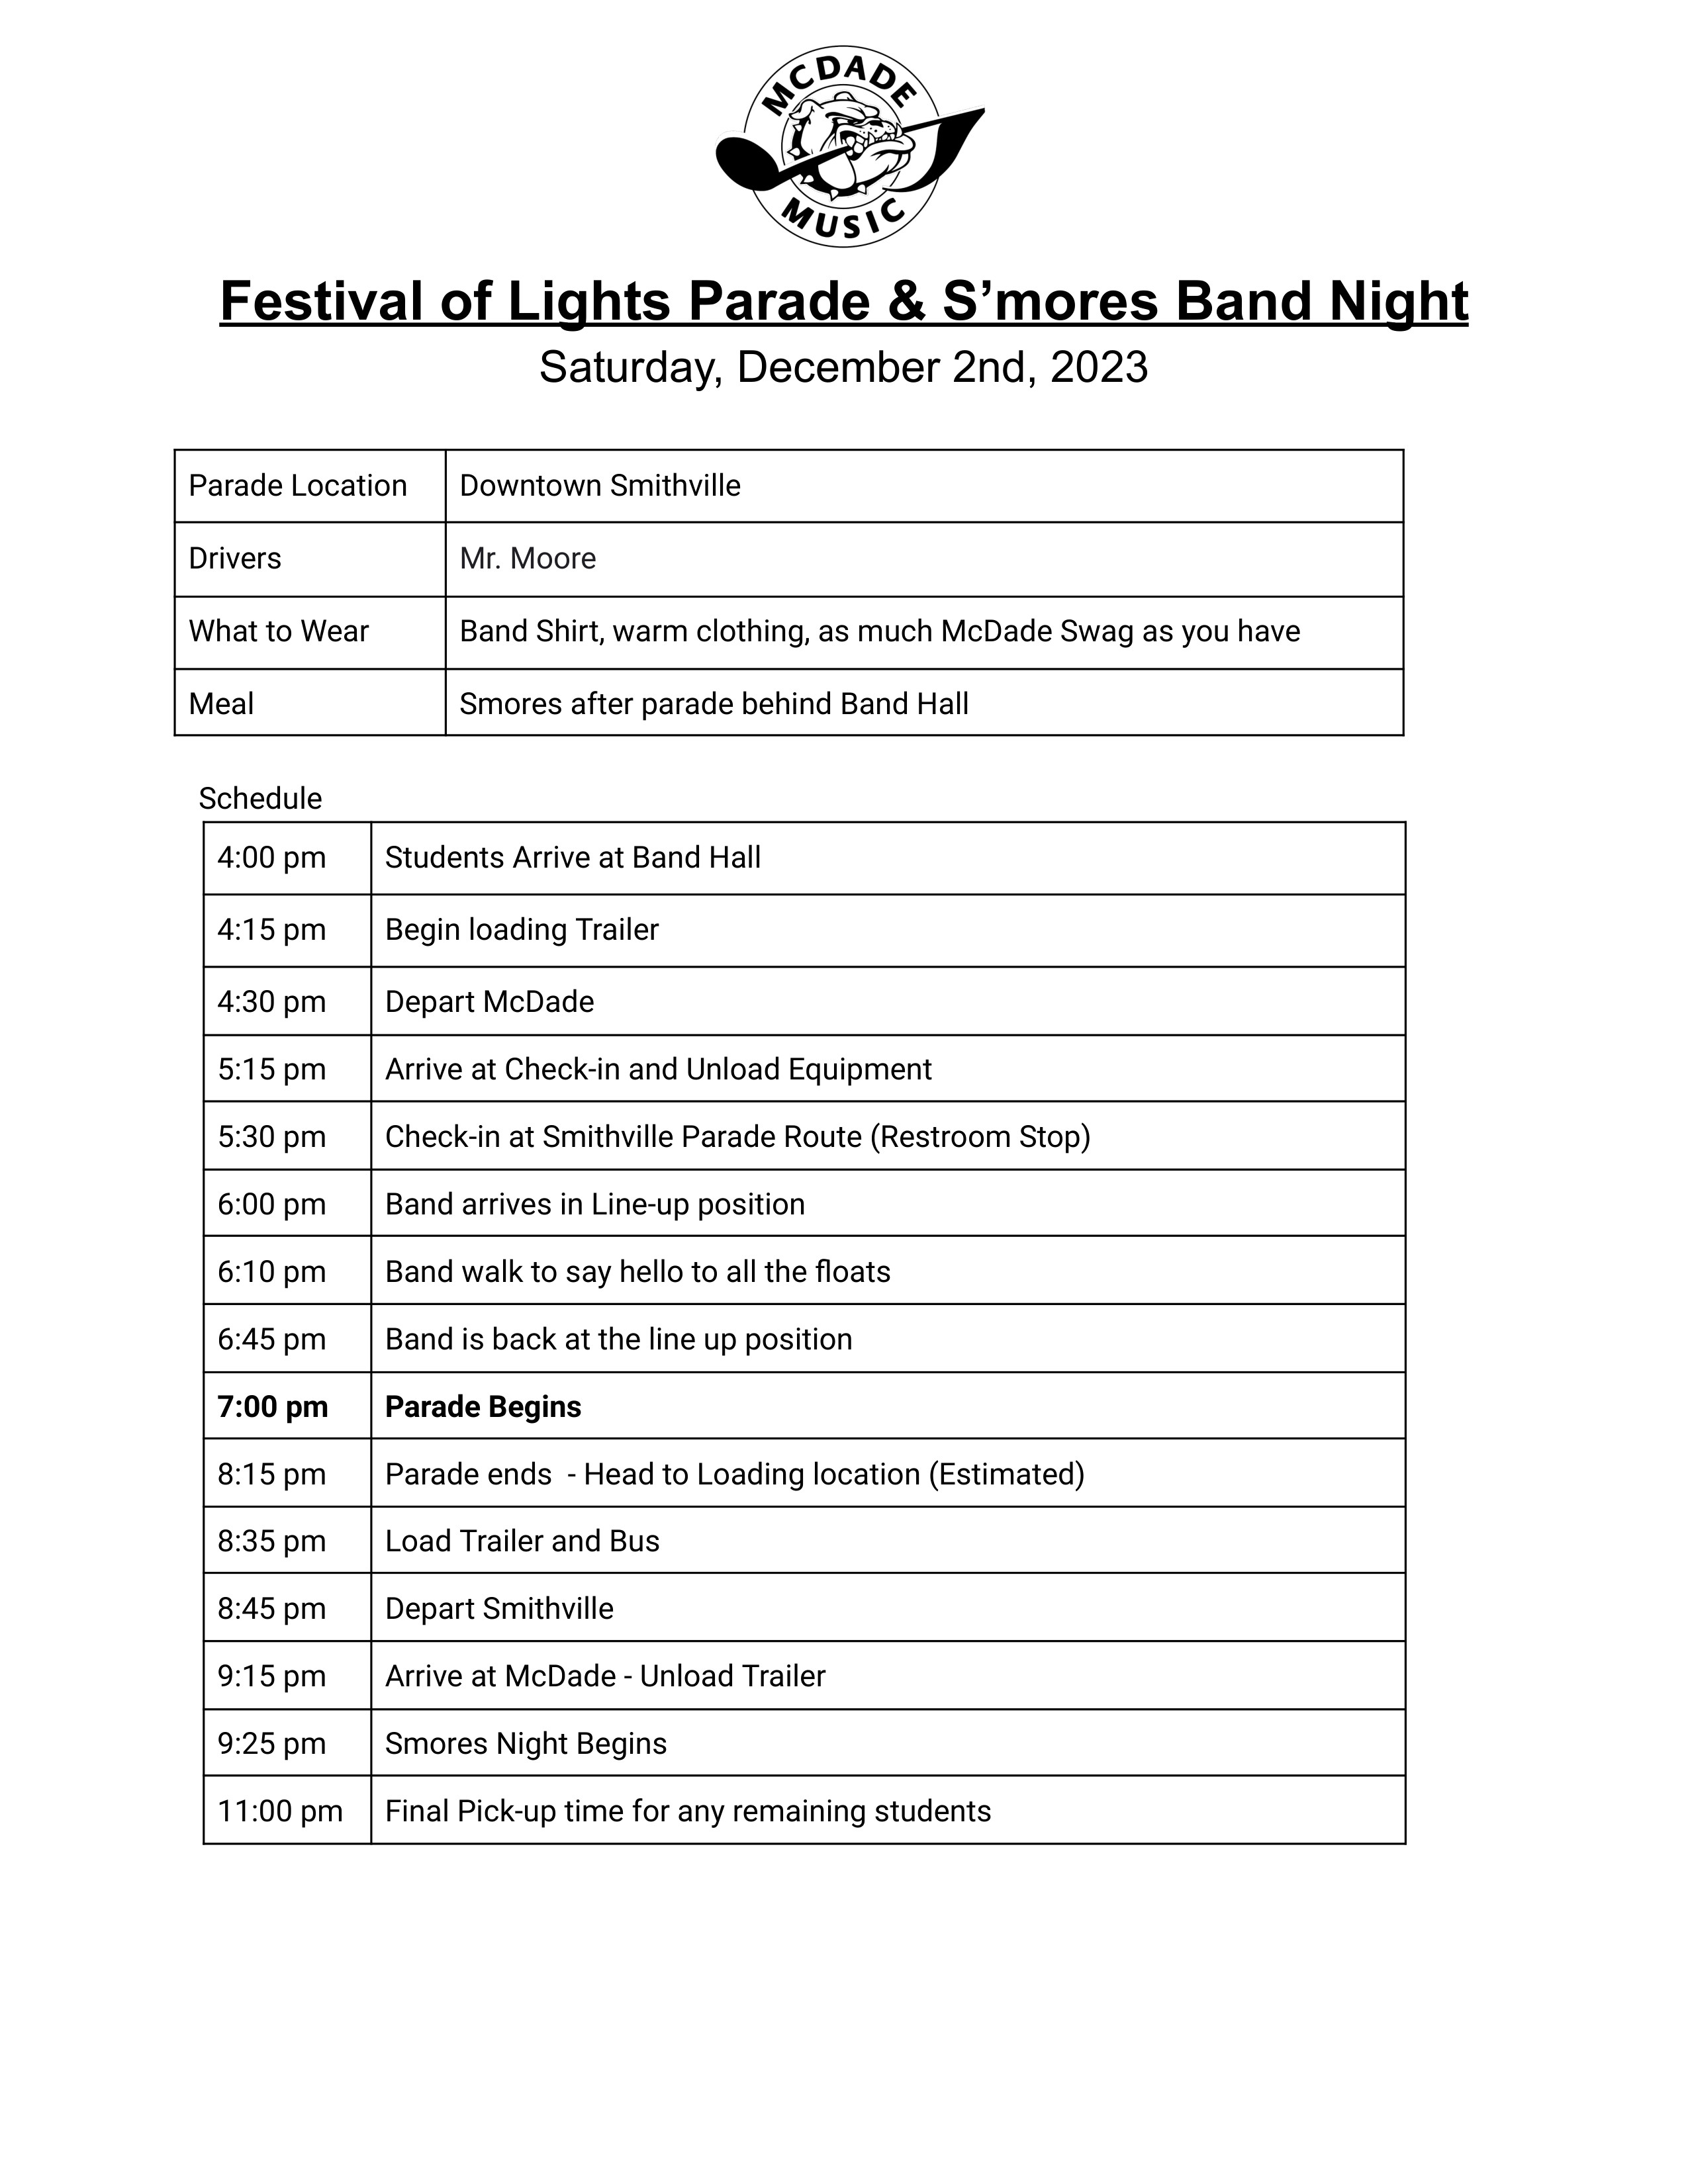 Festival of lights schedule